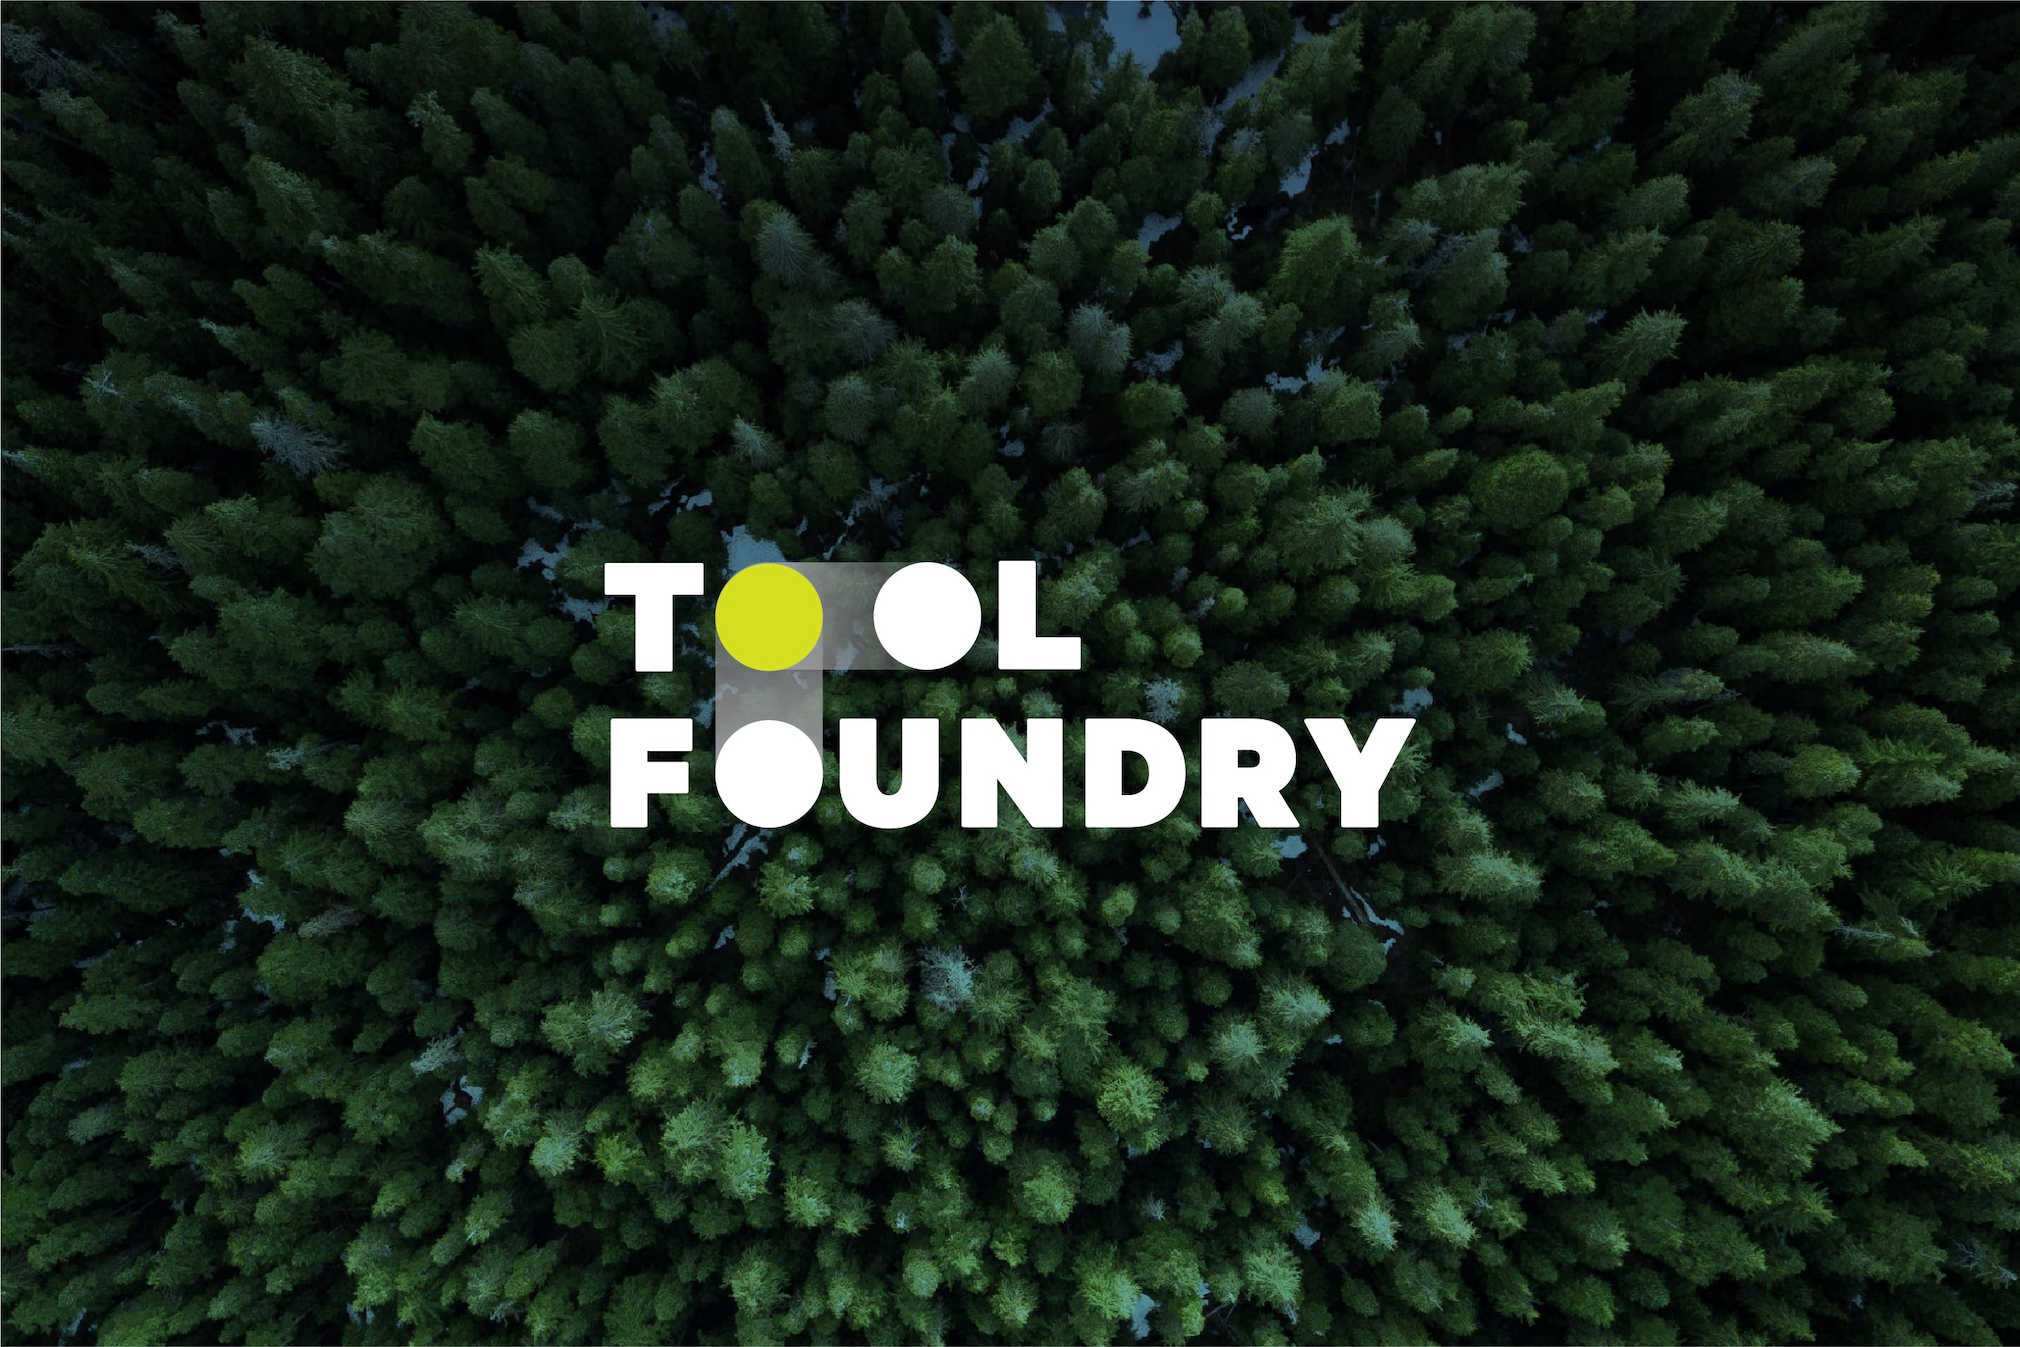 Tool Foundry